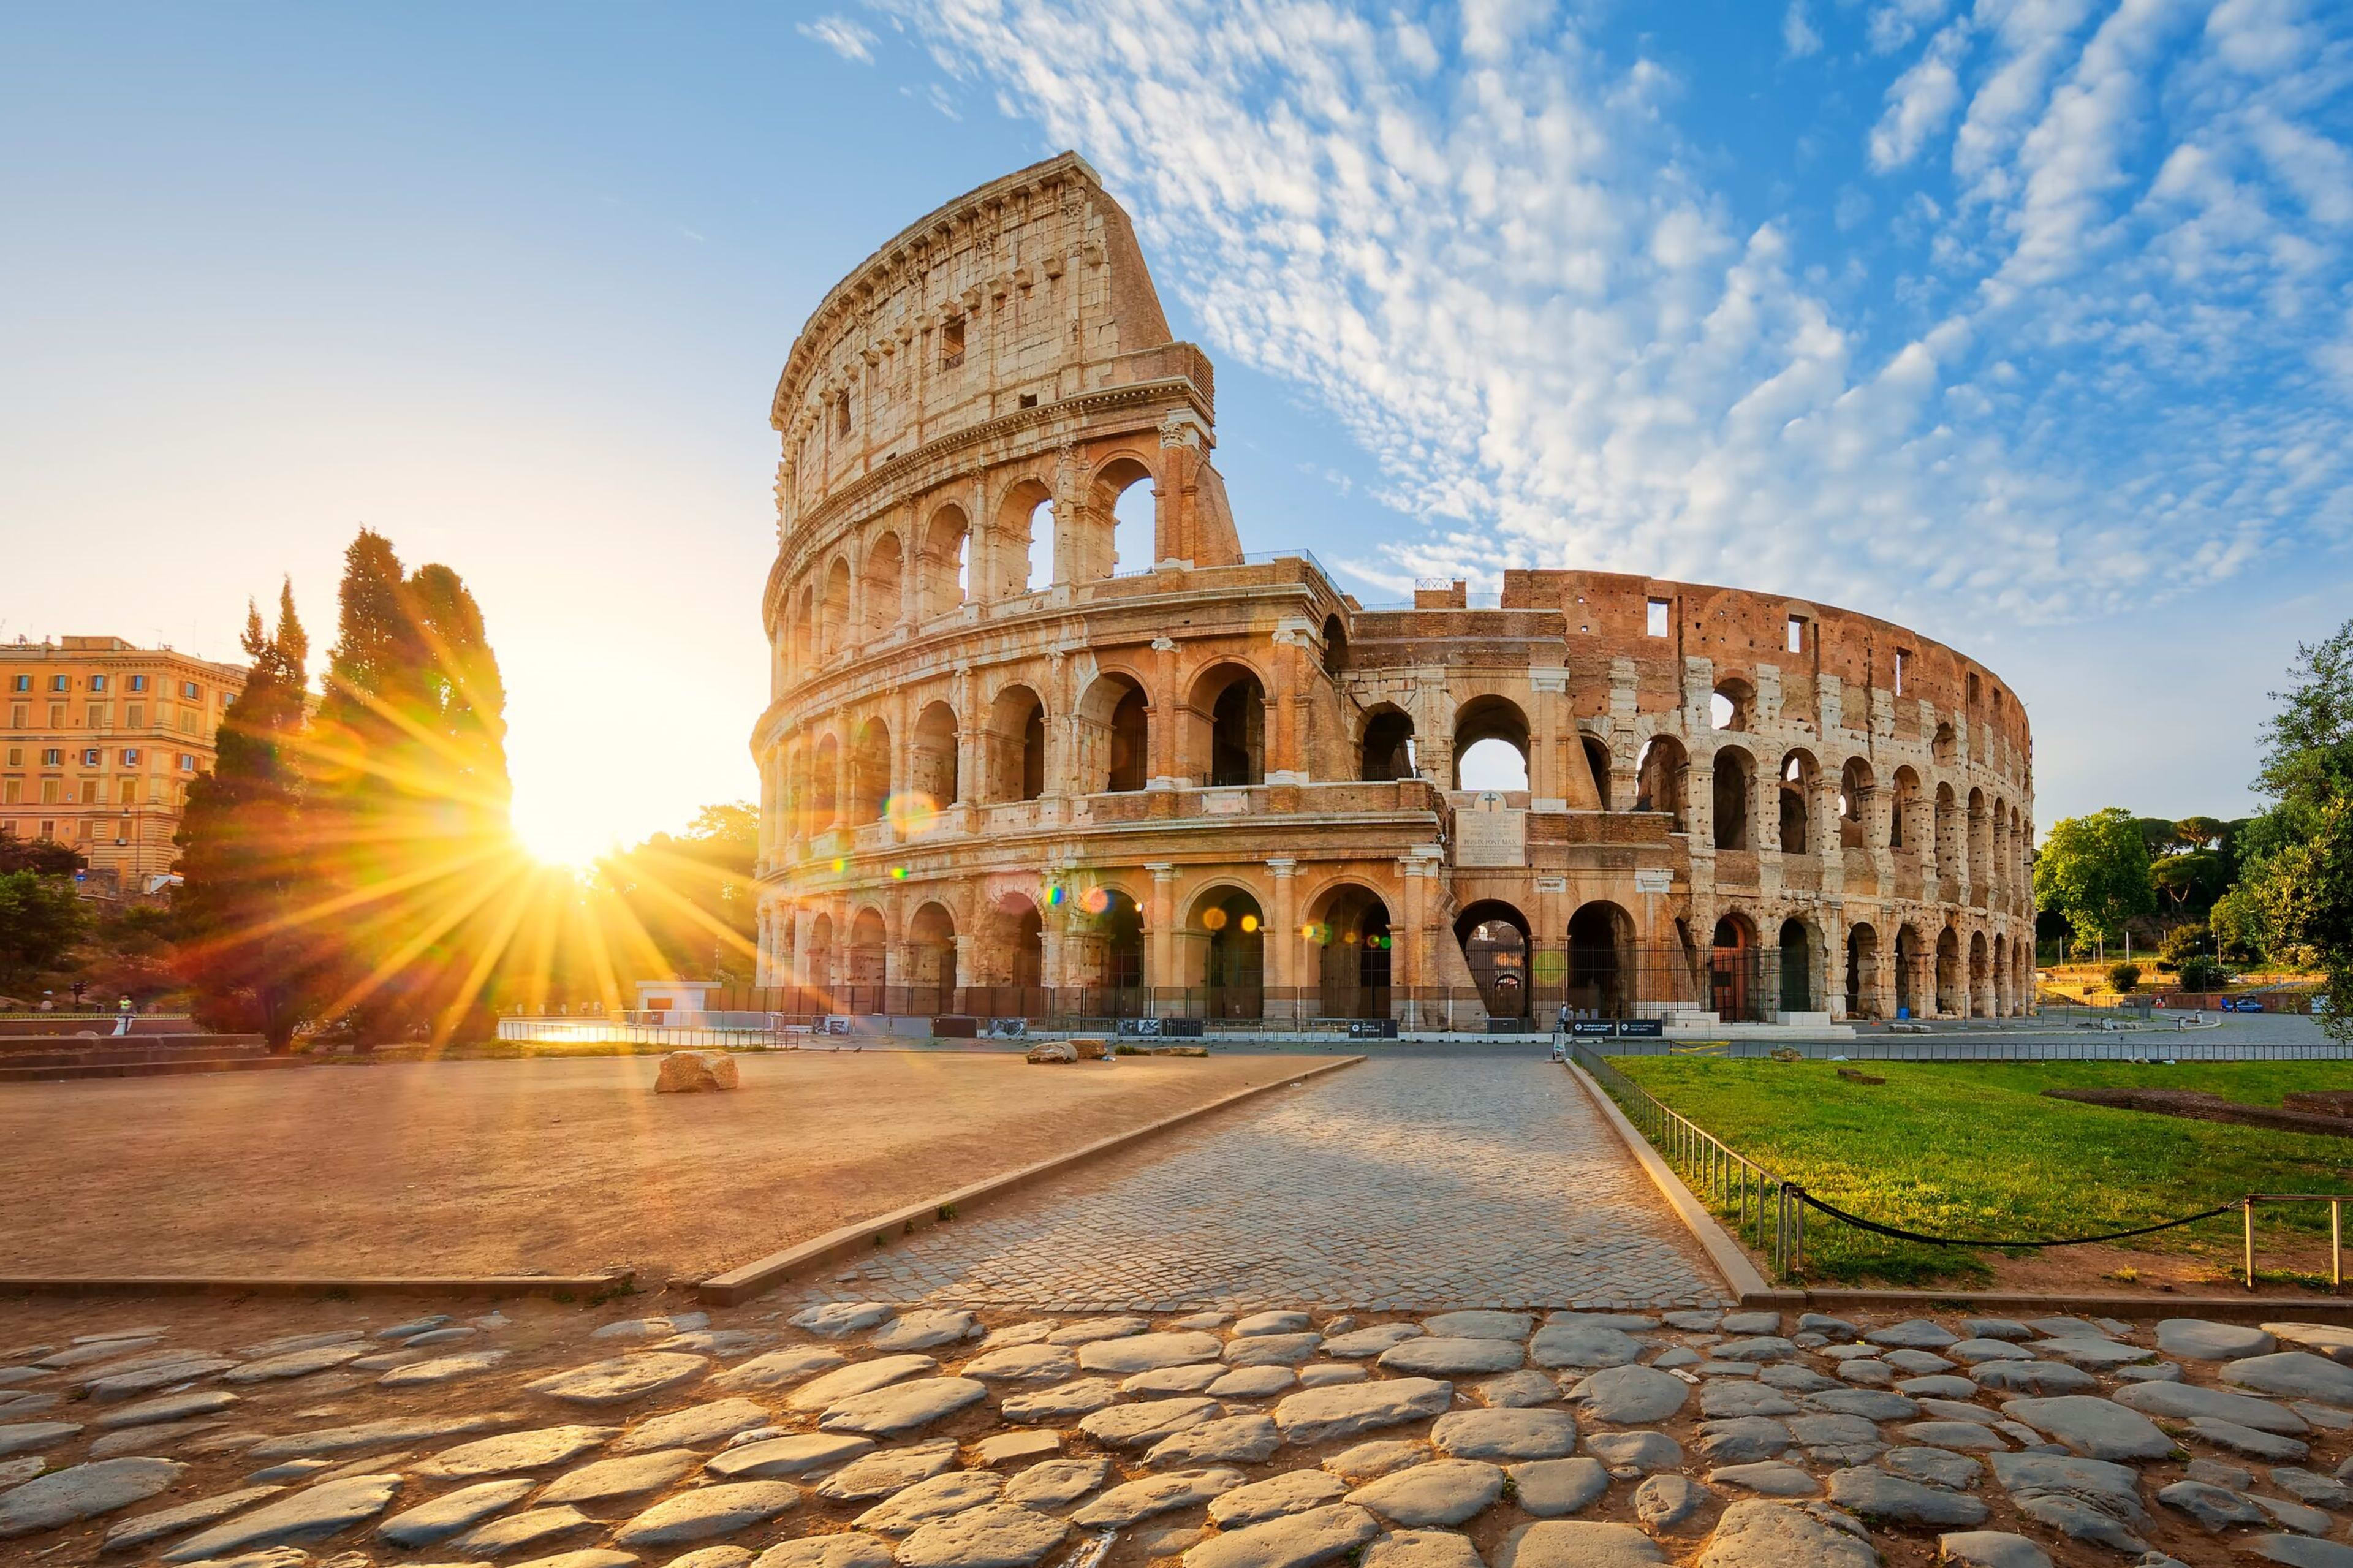 Web_image-Róm_Colosseum_iStock-539115110